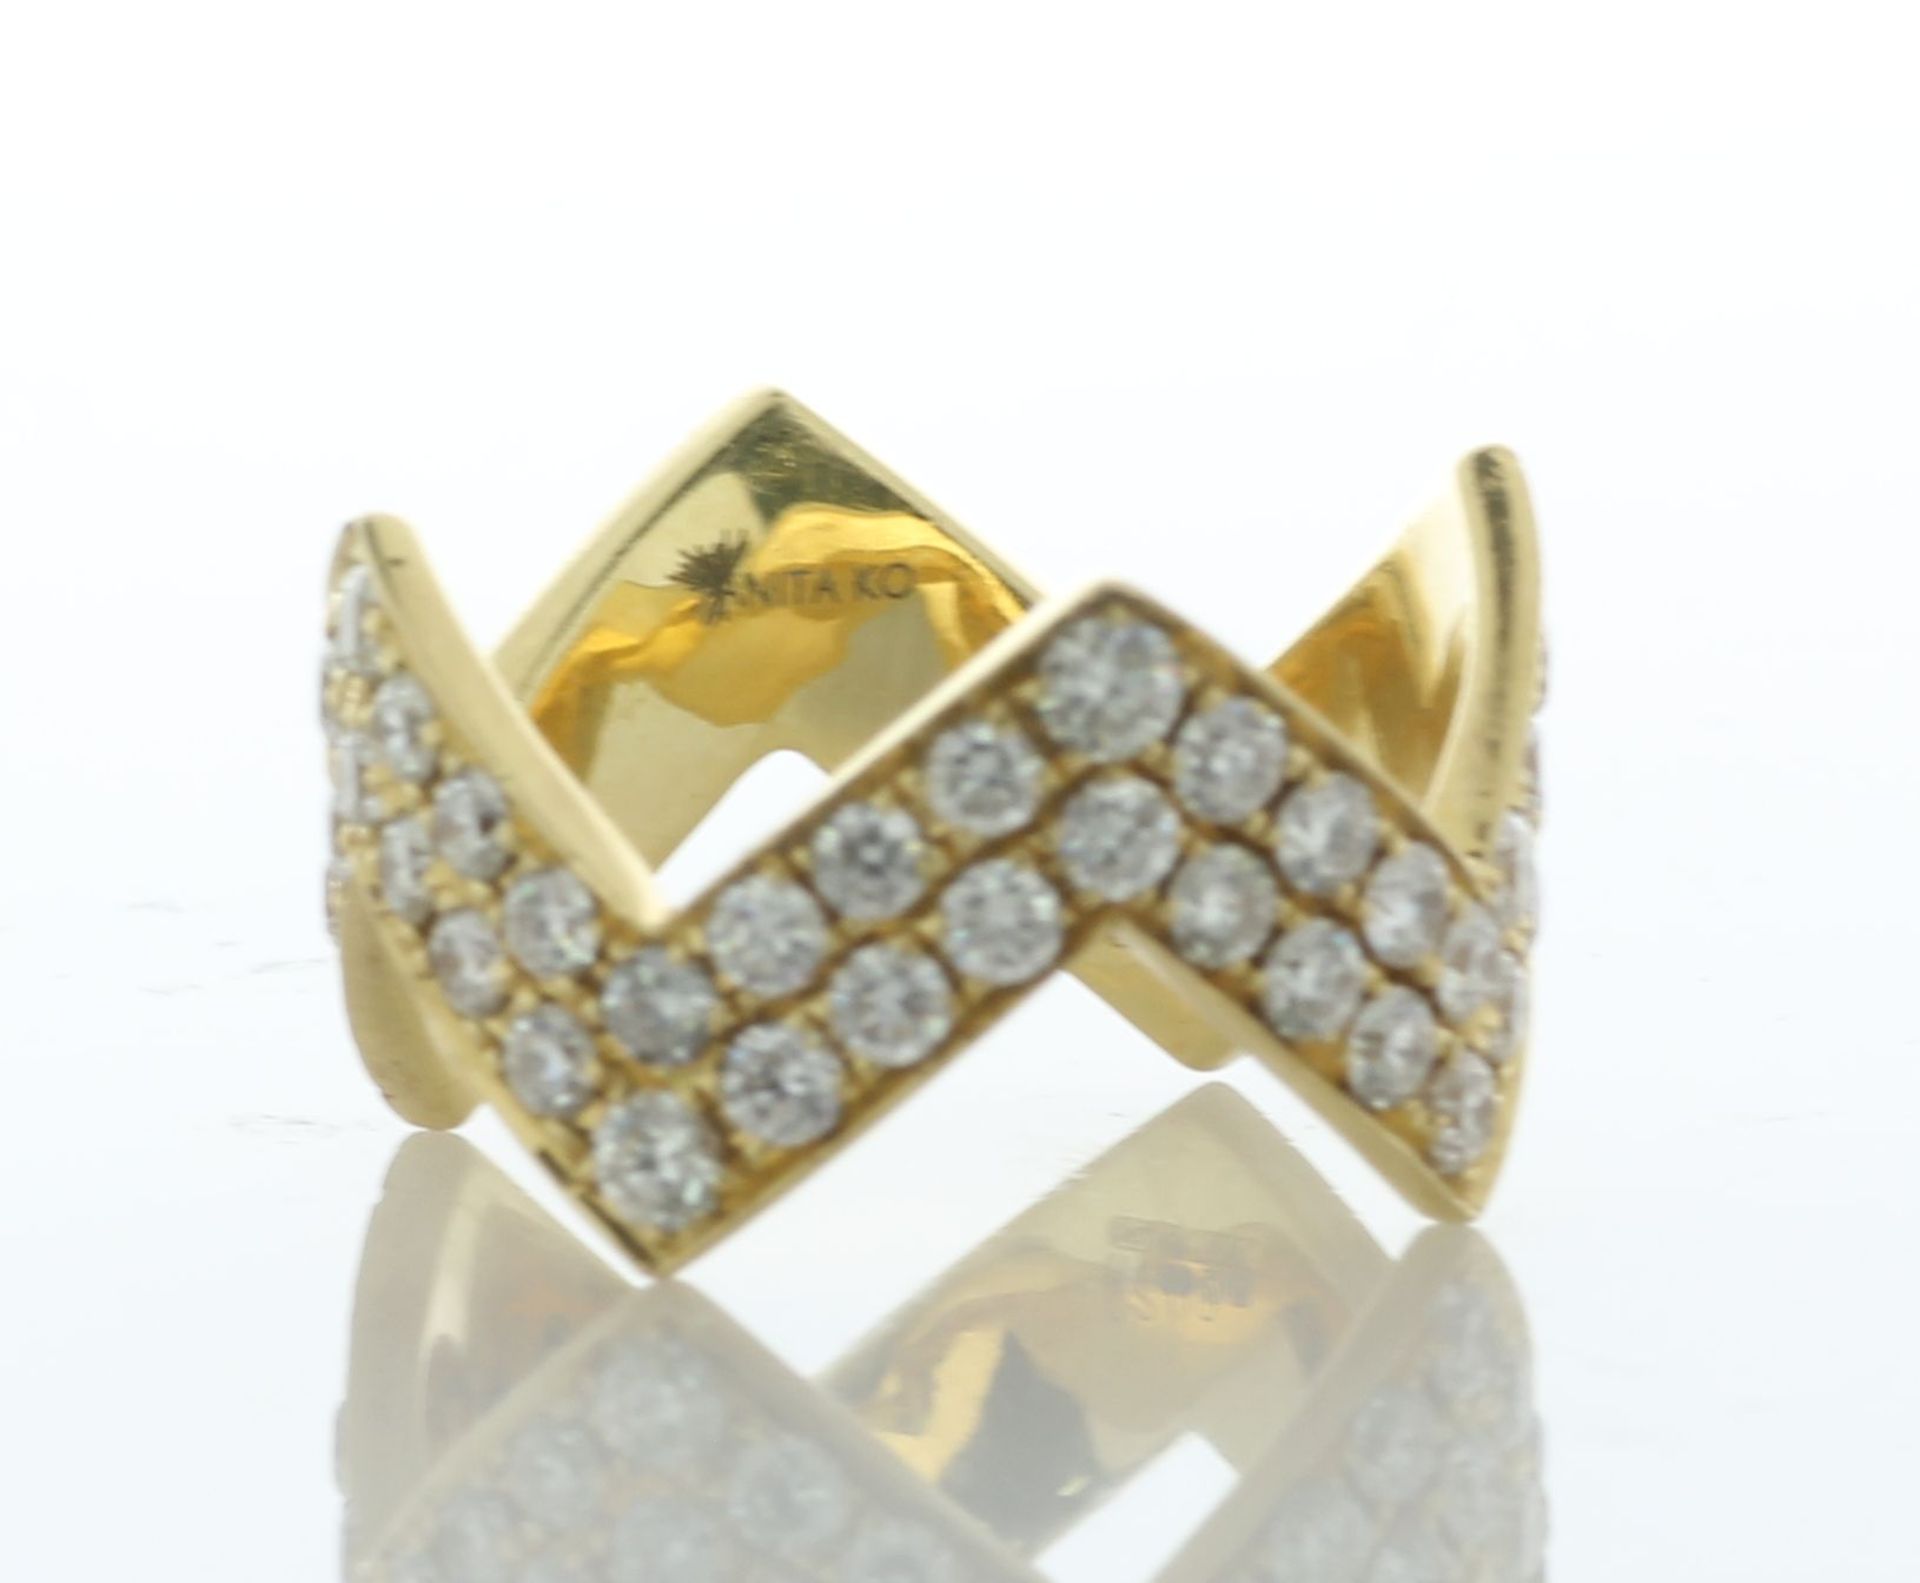 18ct Yellow Gold Diamond Anita Ko Chevron Ring 2.09 Carats - Valued By AGI £7,250.00 - This stunning - Image 2 of 3